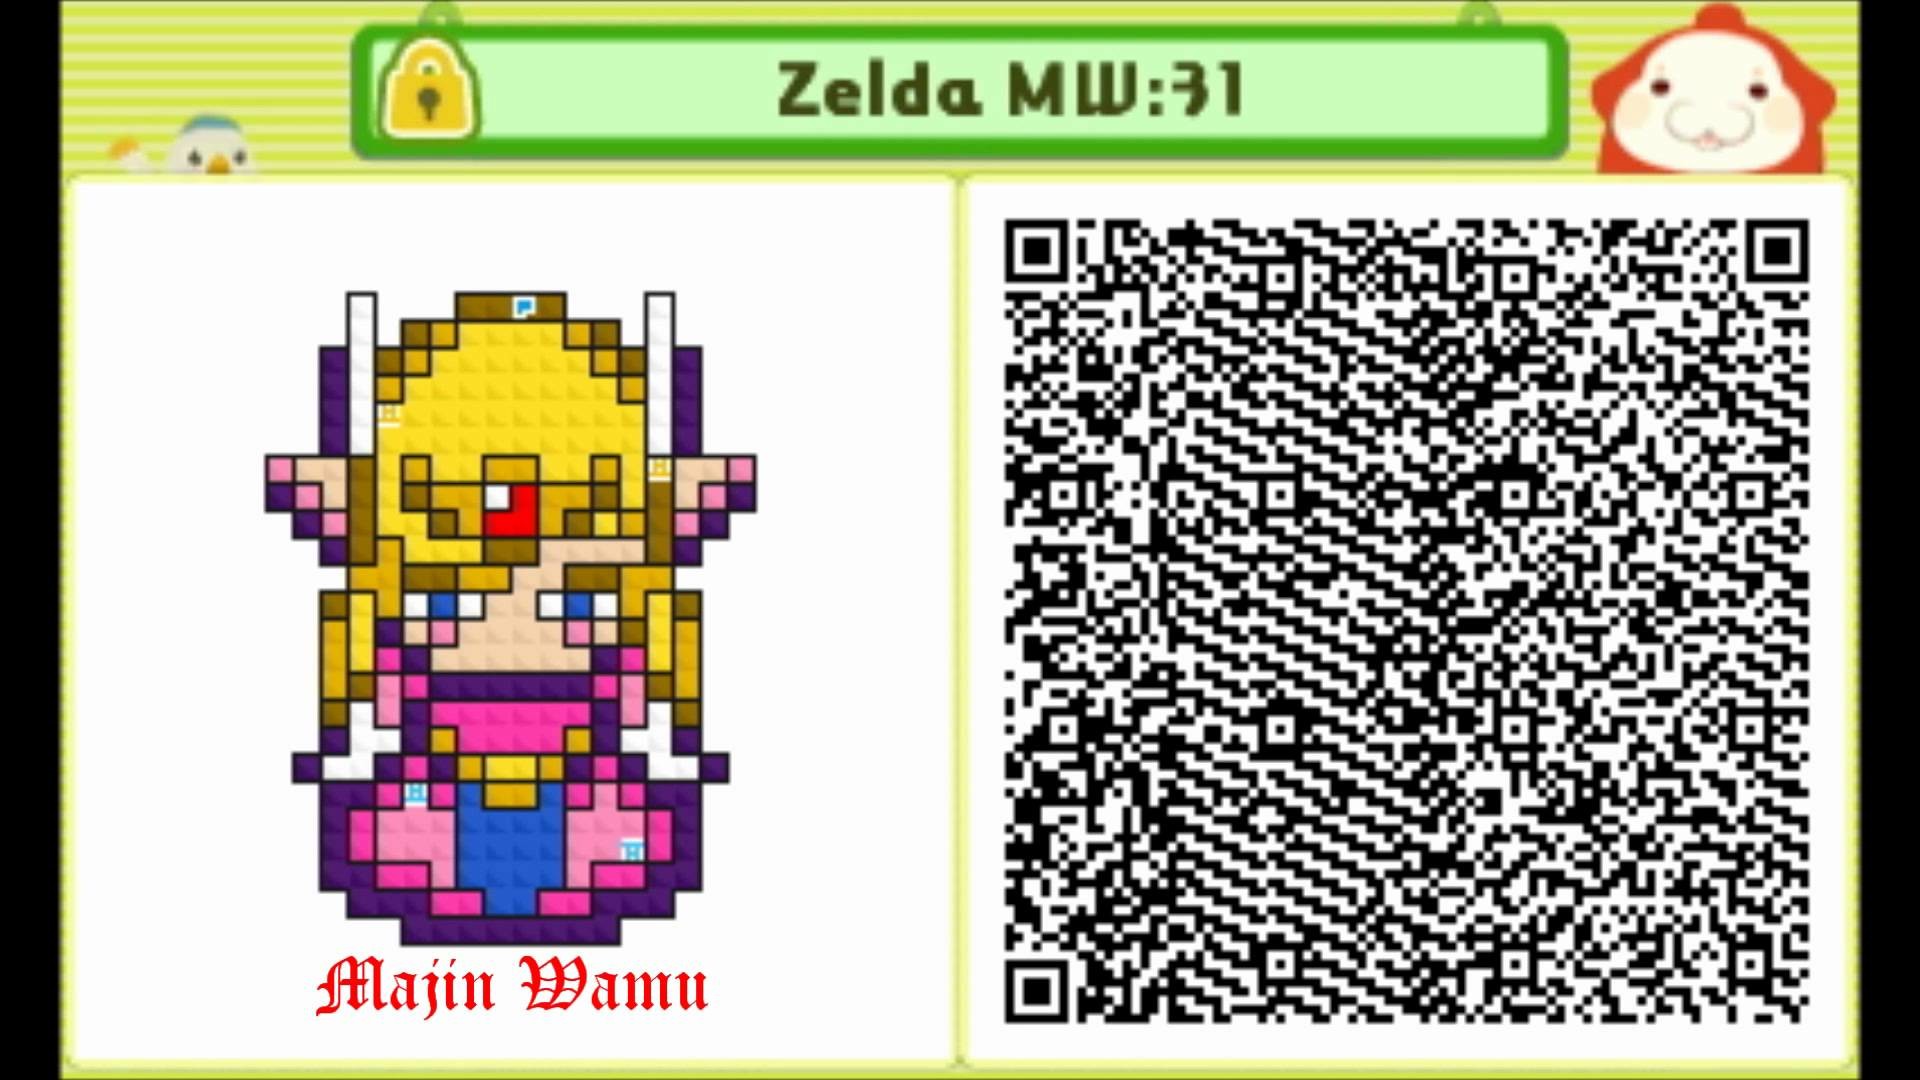 1920x1080 Pushmo: Princess Zelda Custom Level 31 QR Code